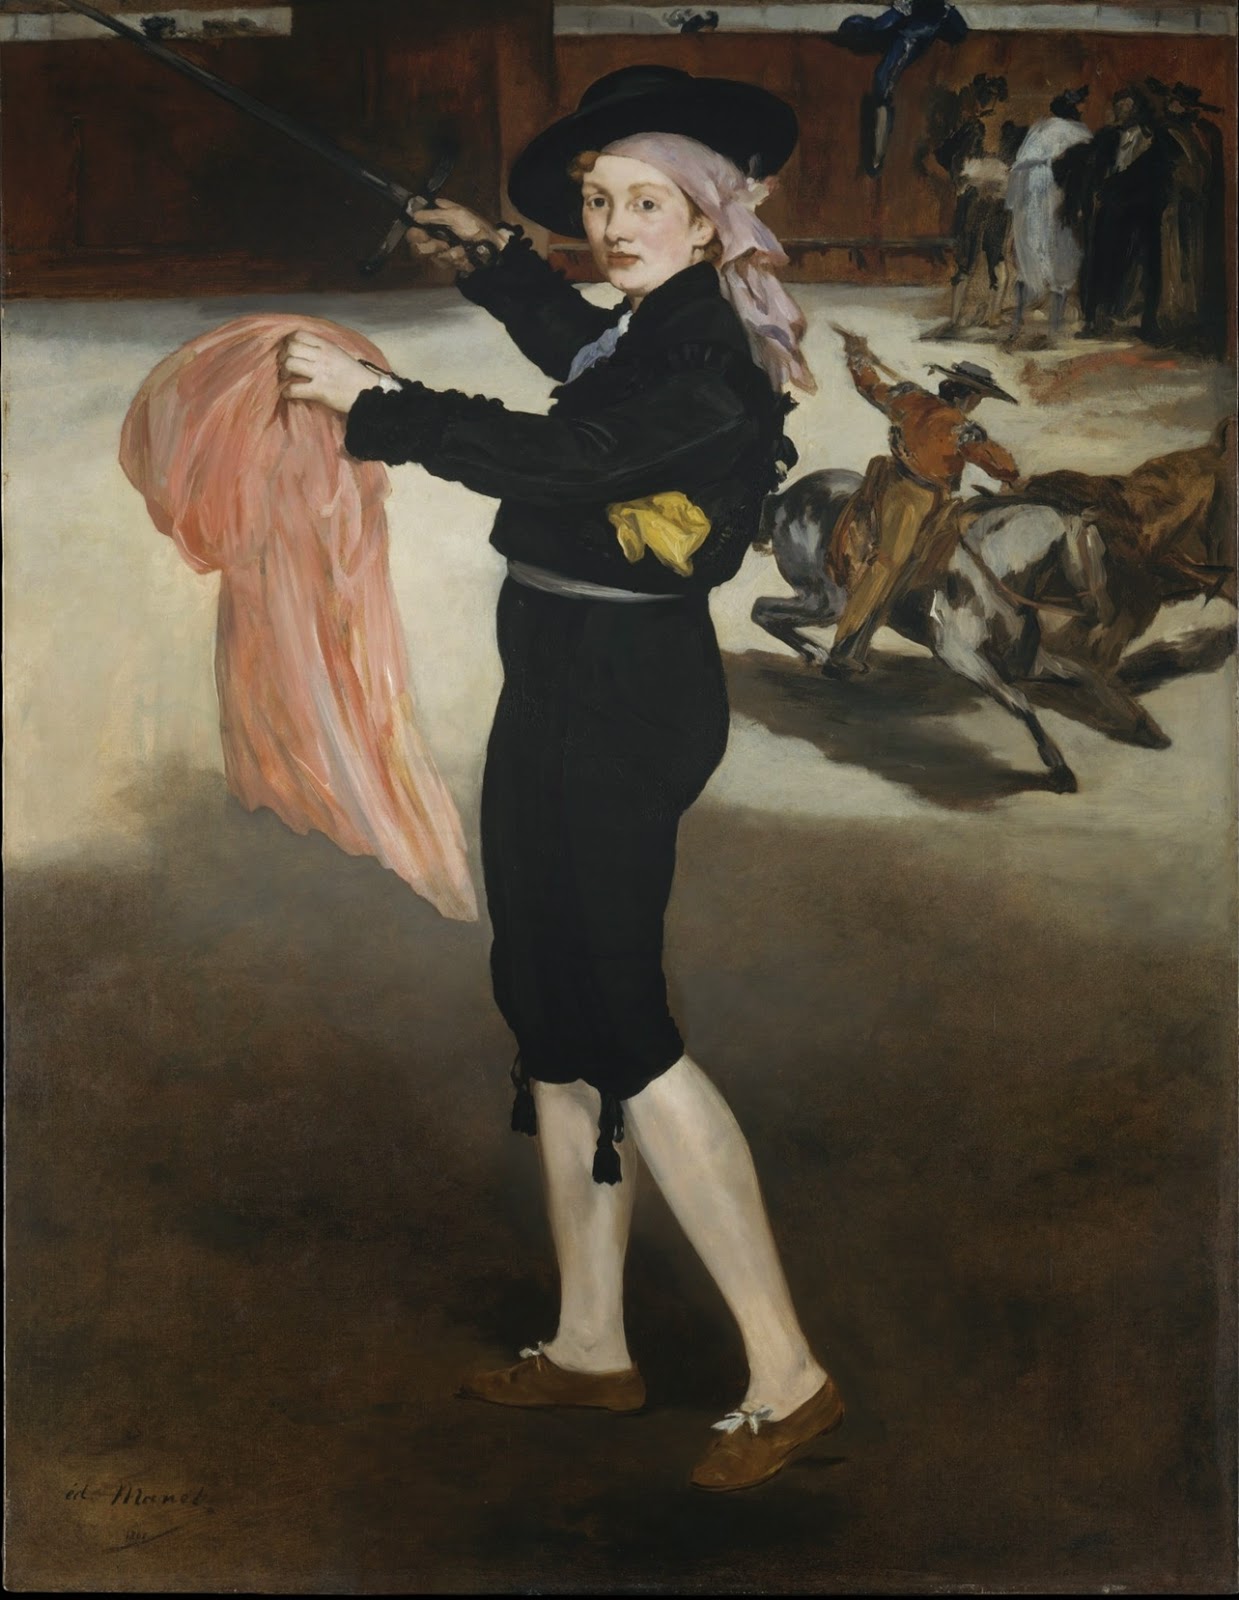 Edouard+Manet-1832-1883 (68).jpg